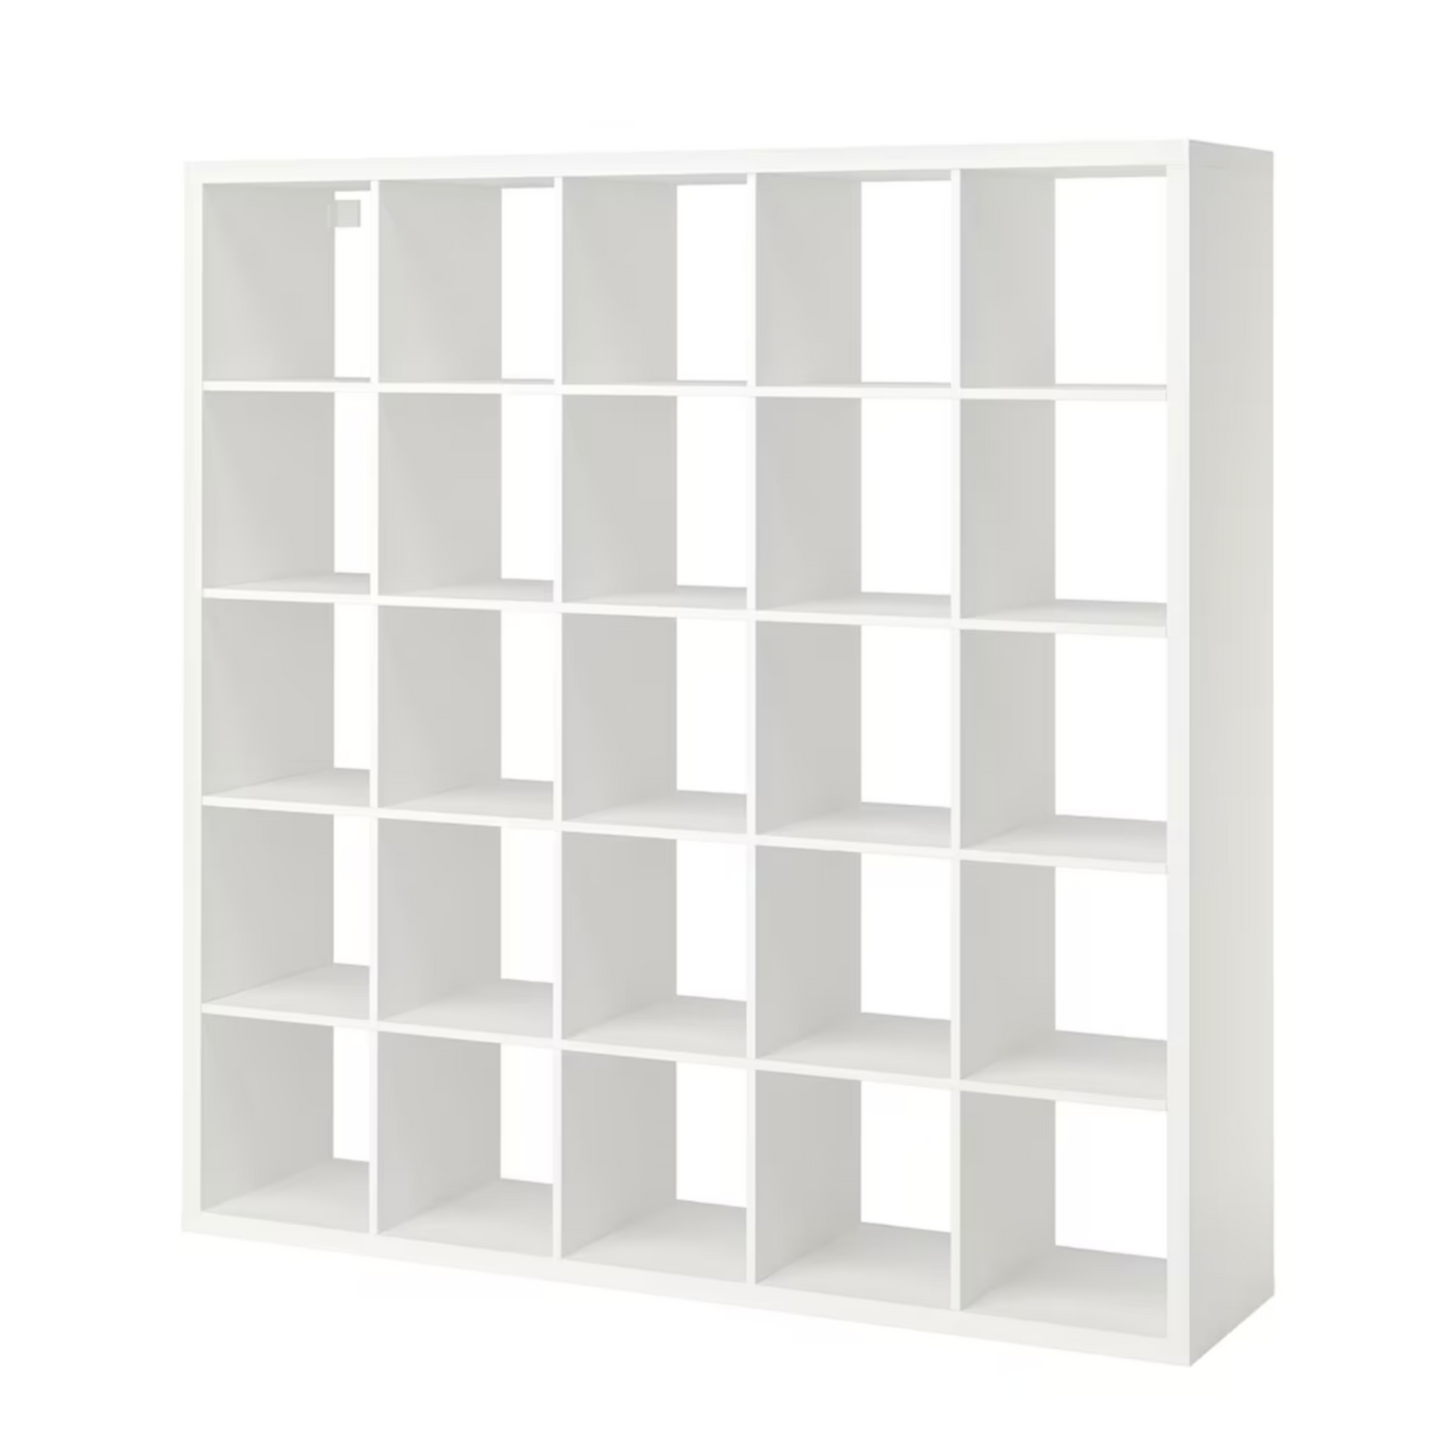 IKEA Kallax 5x5 Shelving unit, 182x182cm, White (1564819973)